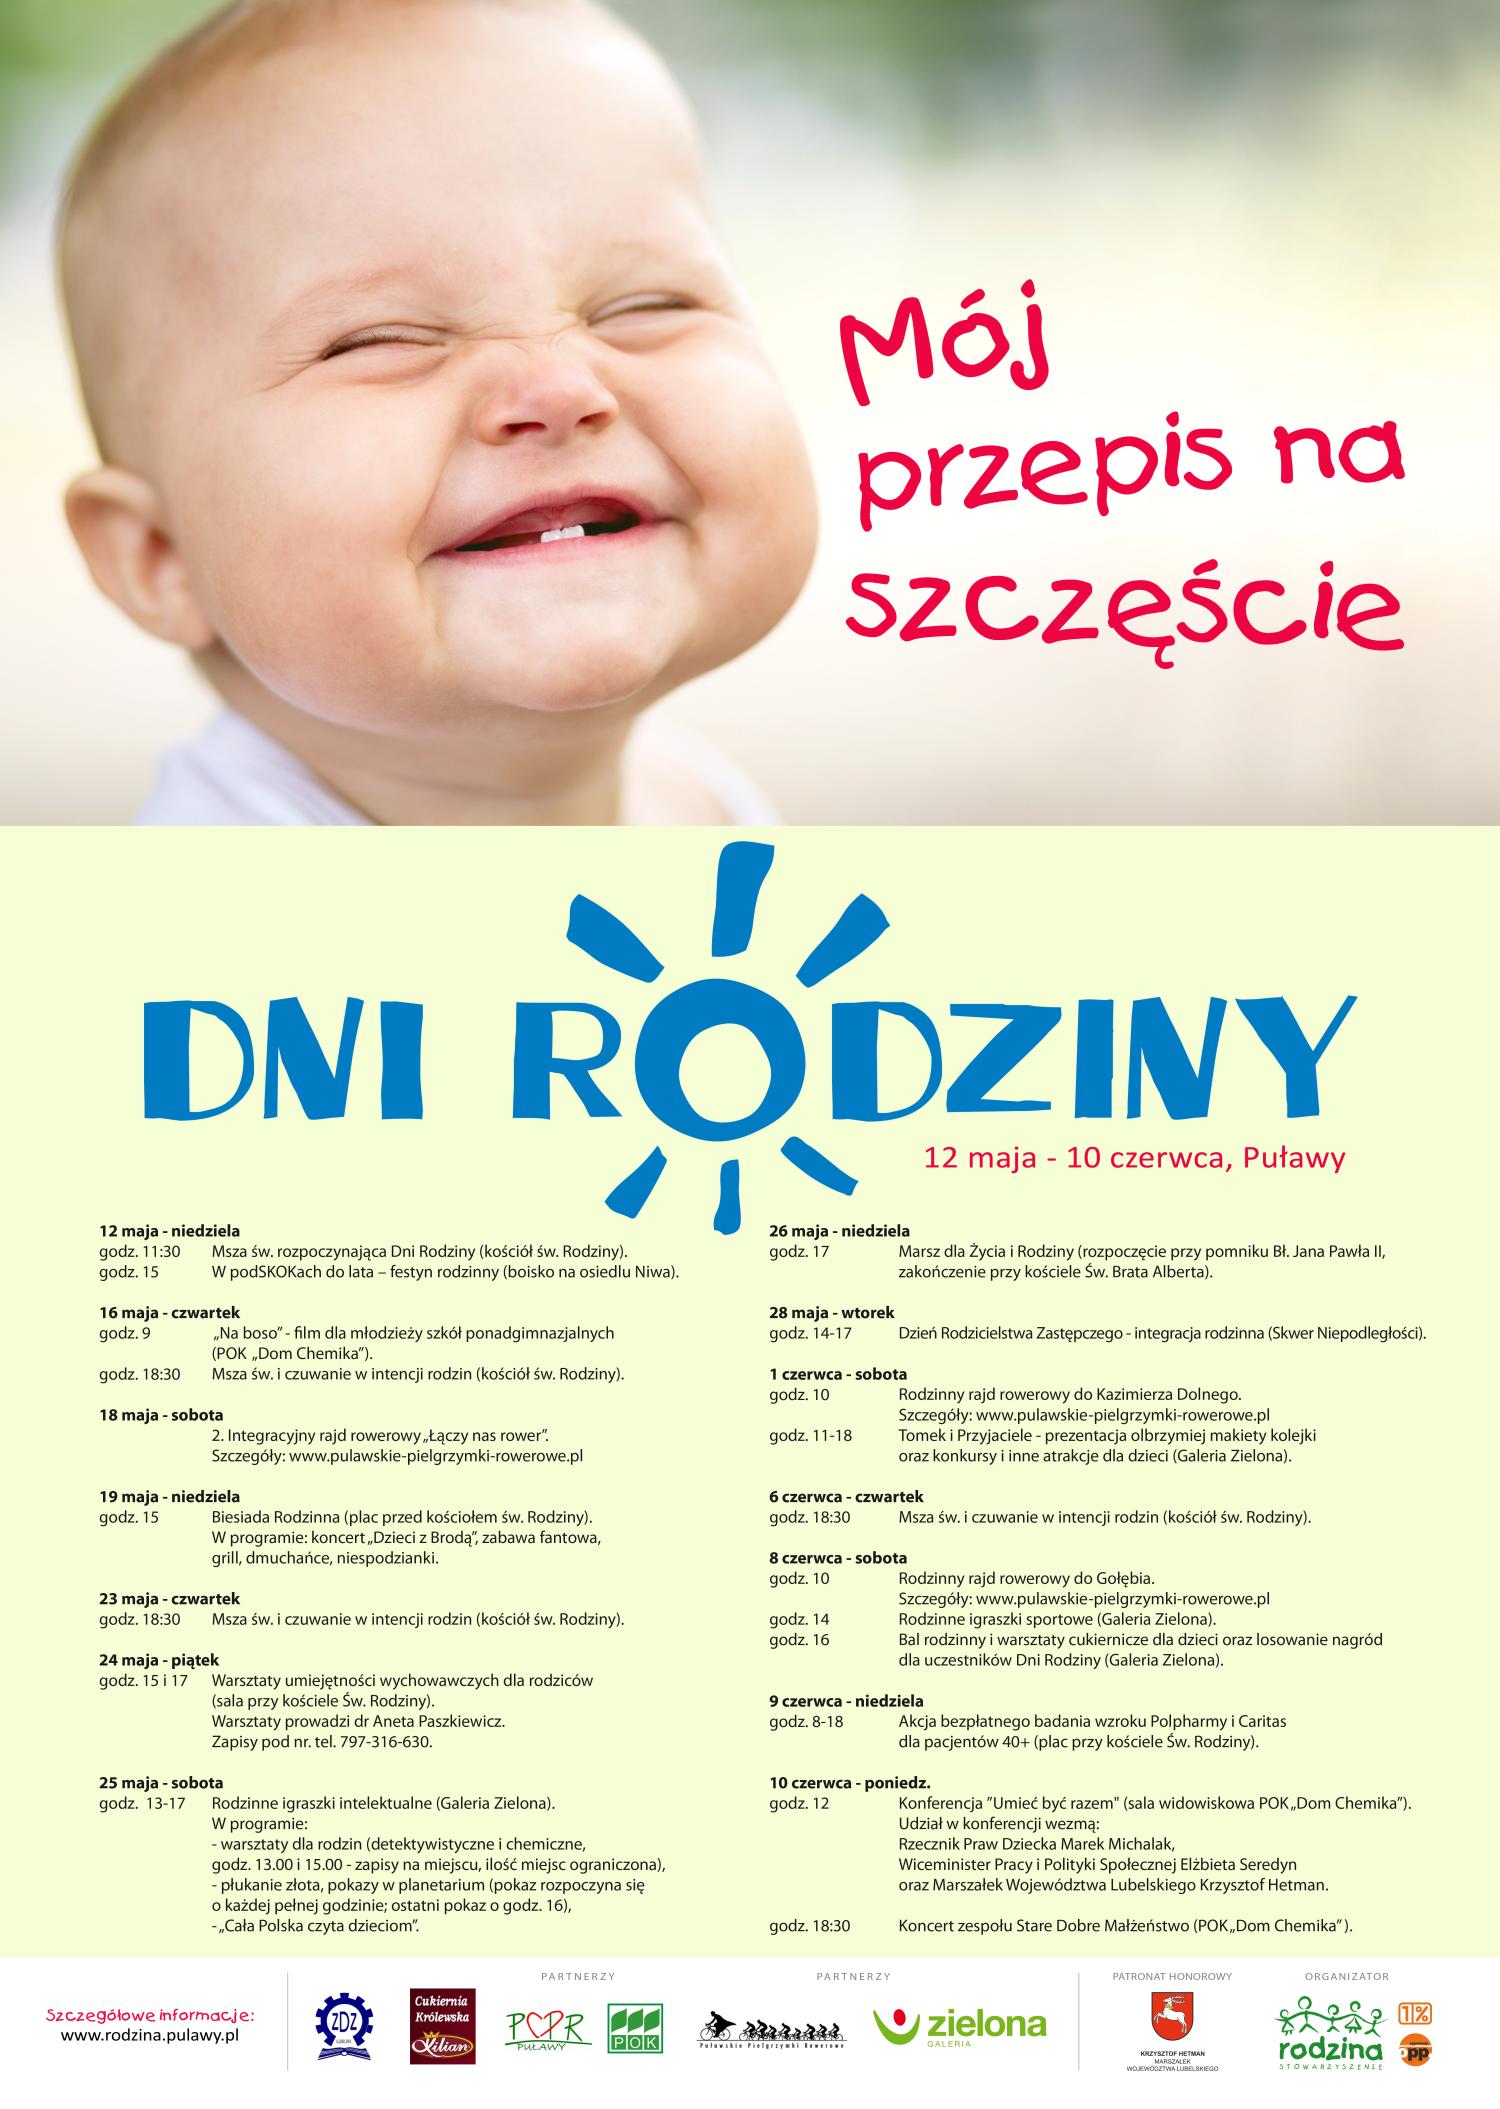 DNI_RODZINY2013_plakat